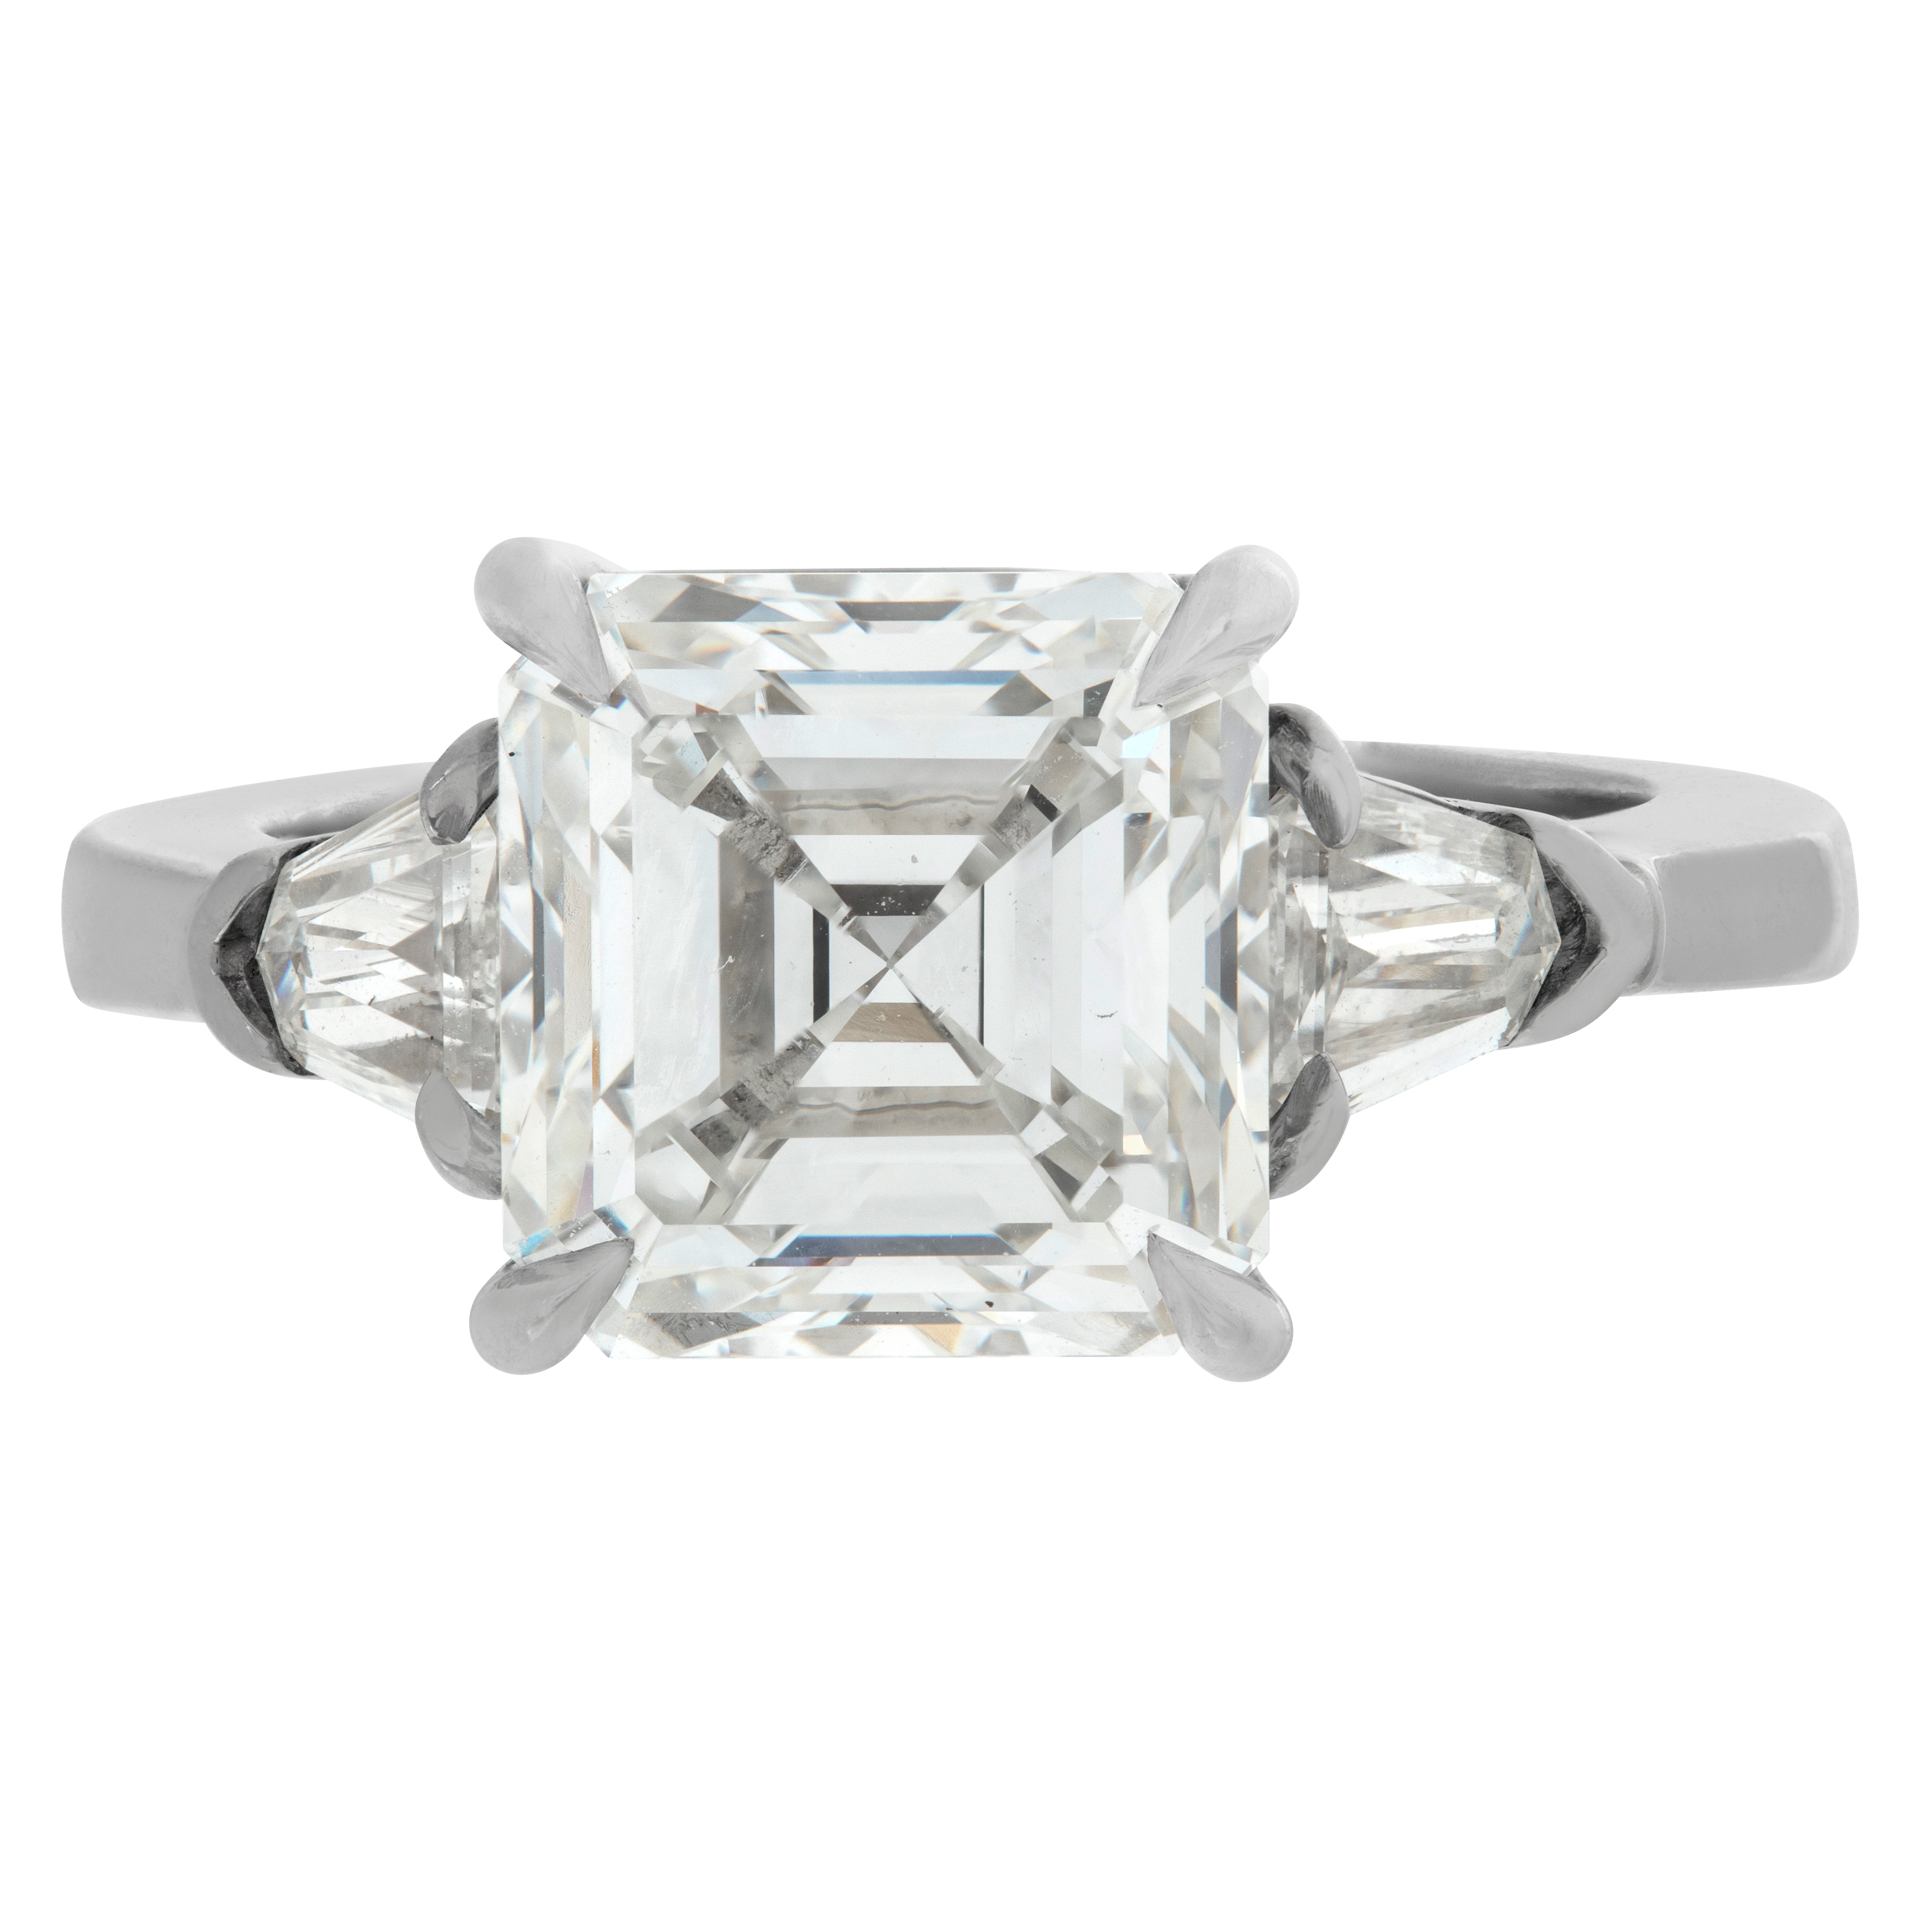 GIA certified square emerald cut diamond 4.08 carat (G color, VVS1 clarity) ring set in platinum (Stones) image 2